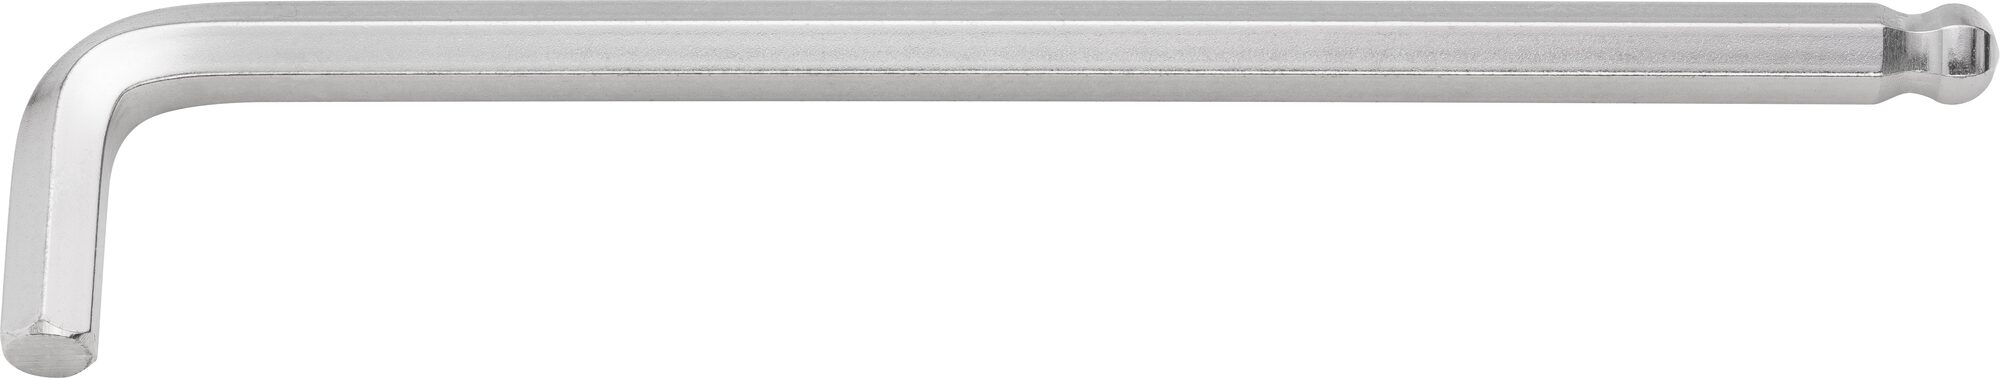 HAZET Winkelschraubendreher 2105LG-12 · Innen Sechskant Profil · 12 mm